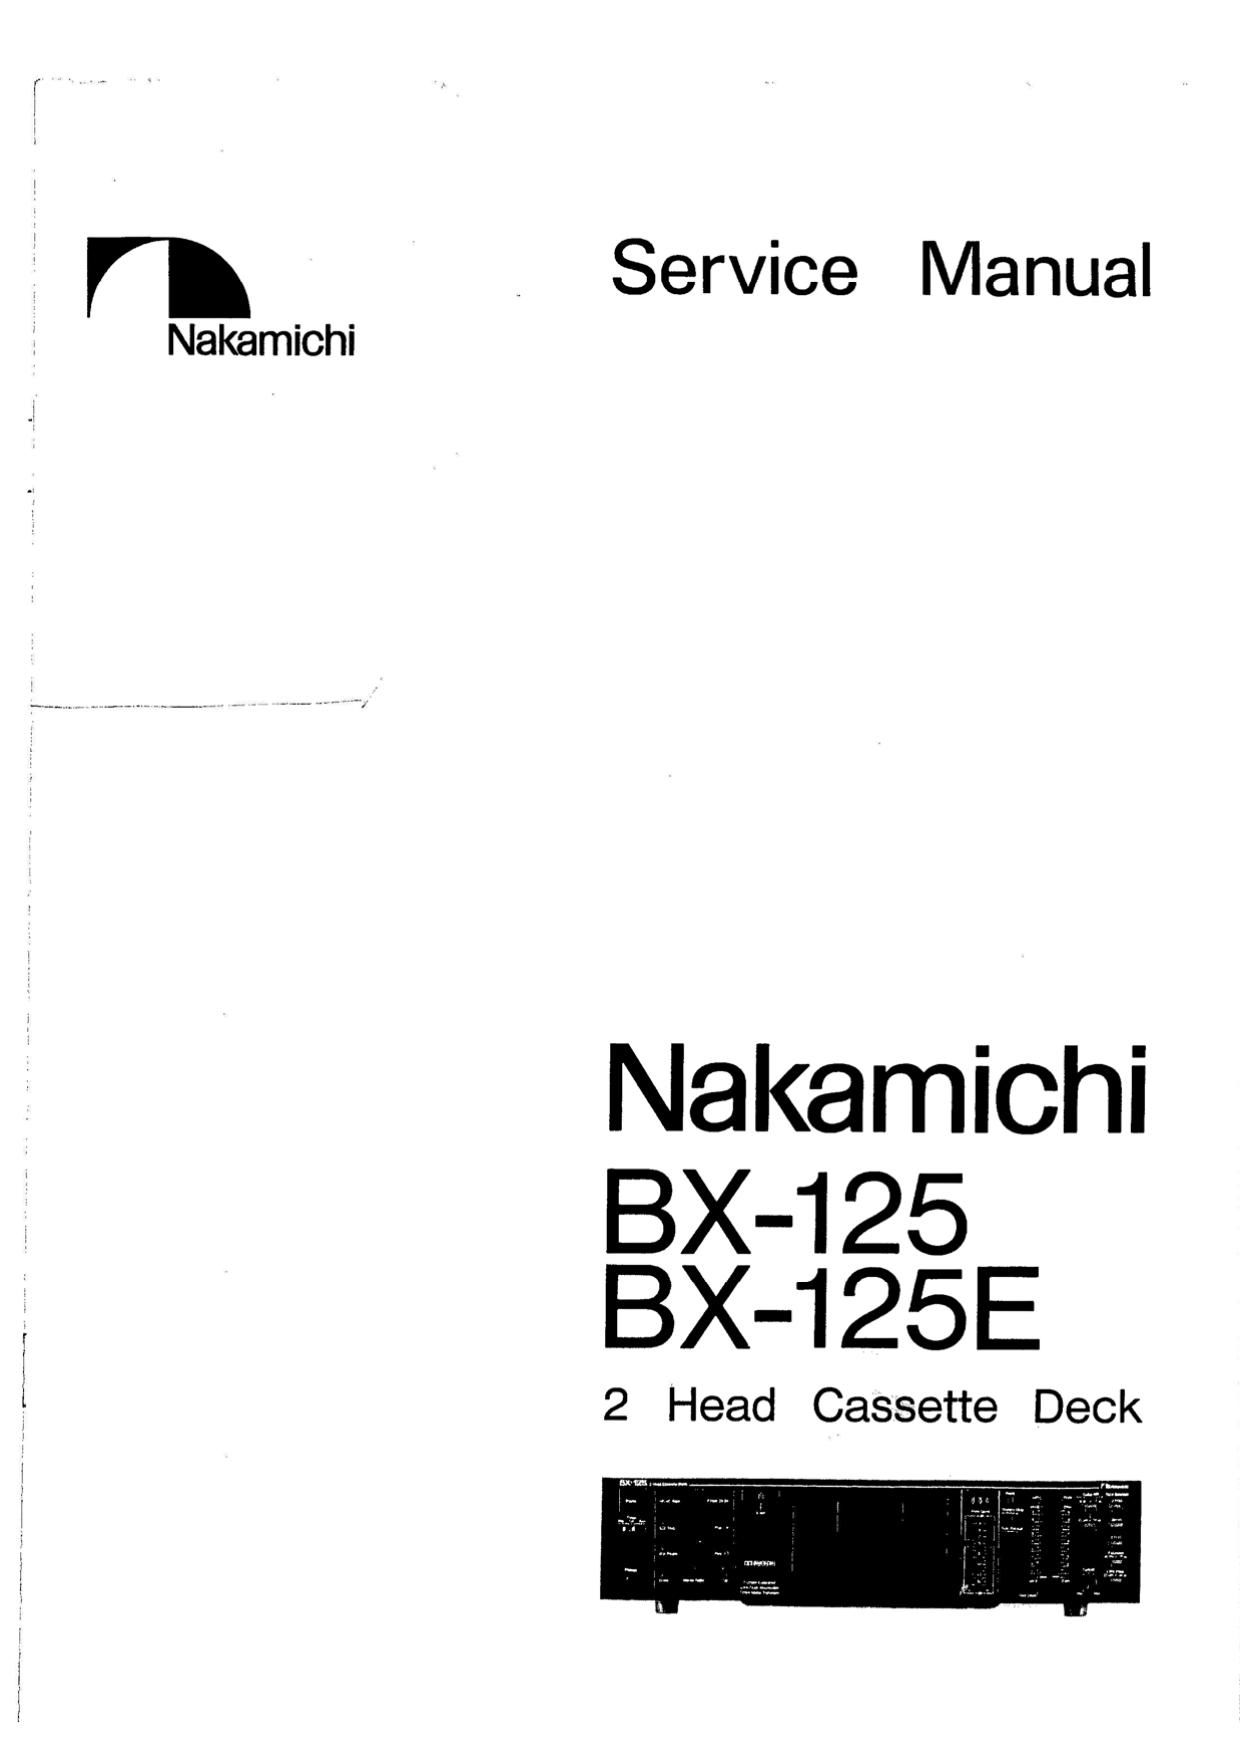 Nakamichi BX 125 E Service Manual